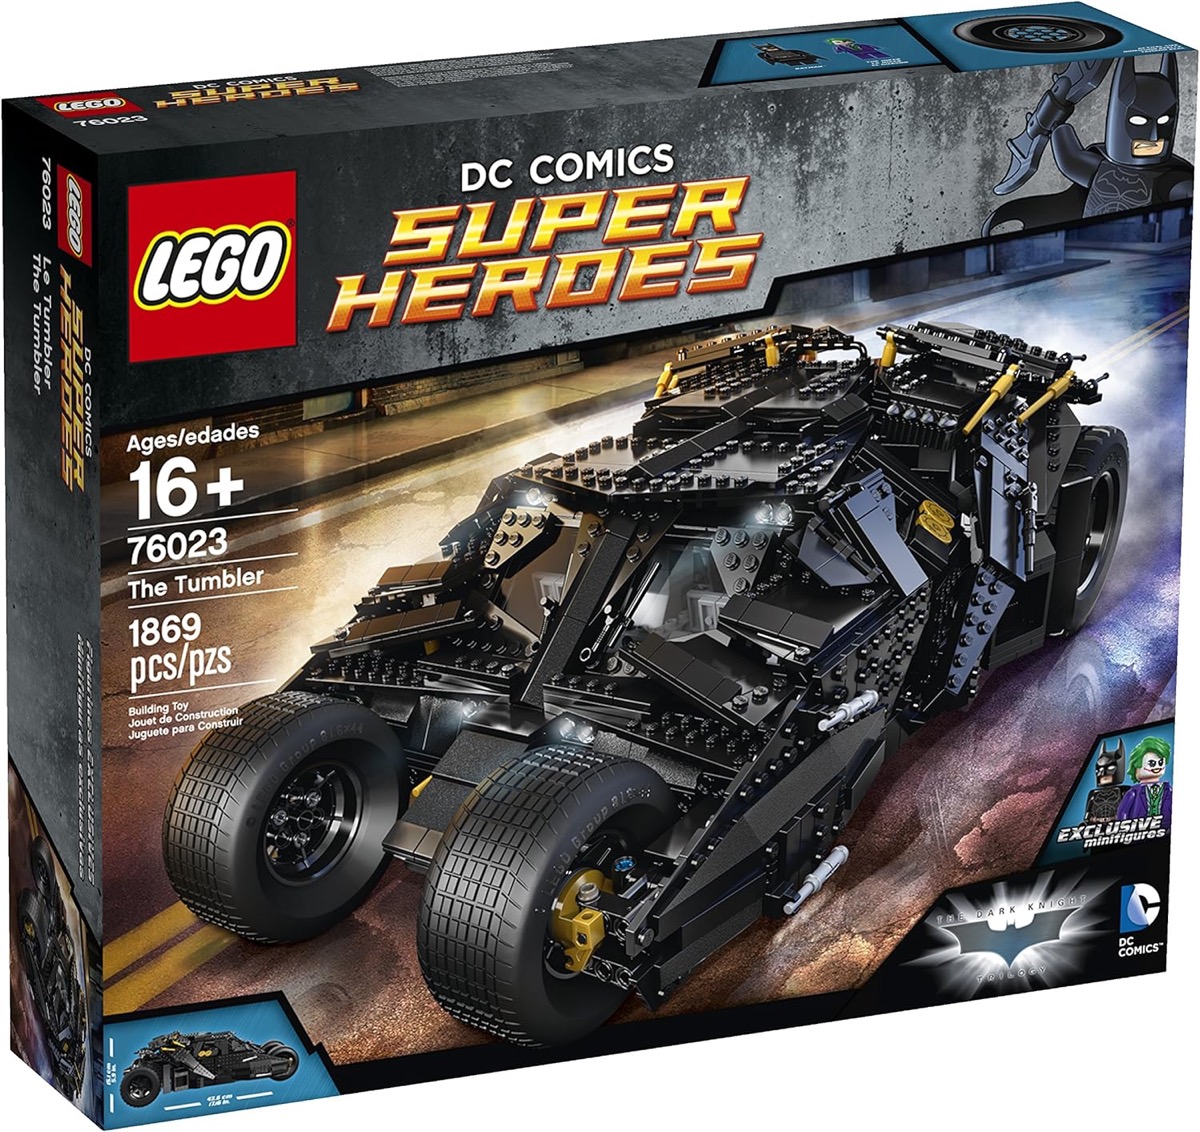 The Tumbler LEGO Batman set 